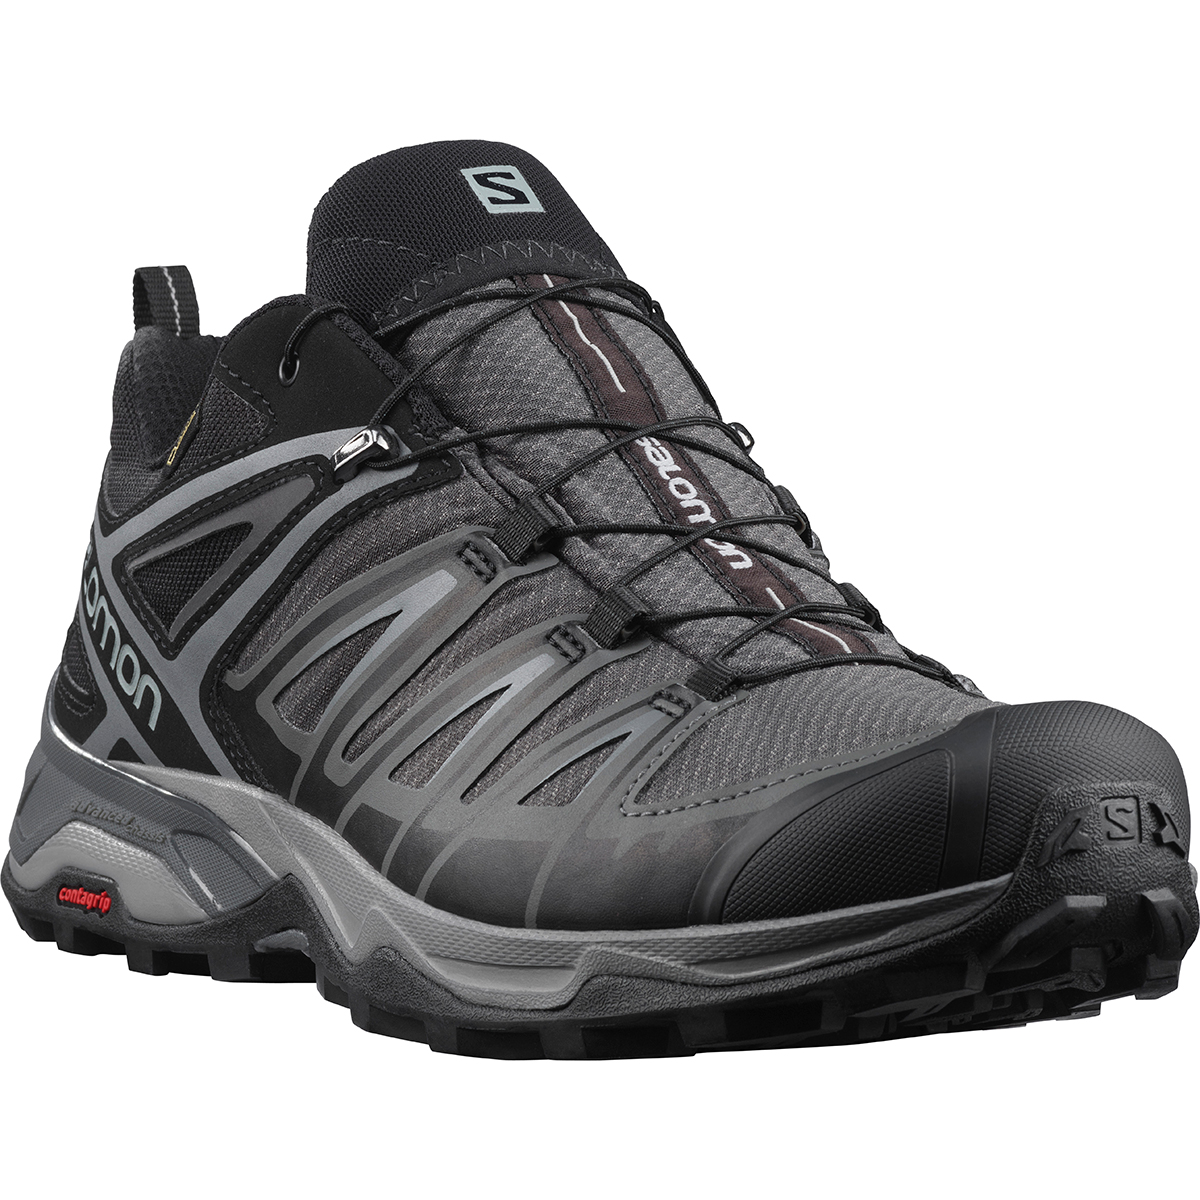 Salomon Men's X Ultra 3 Gore-Tex Hiking Shoes - Size 13